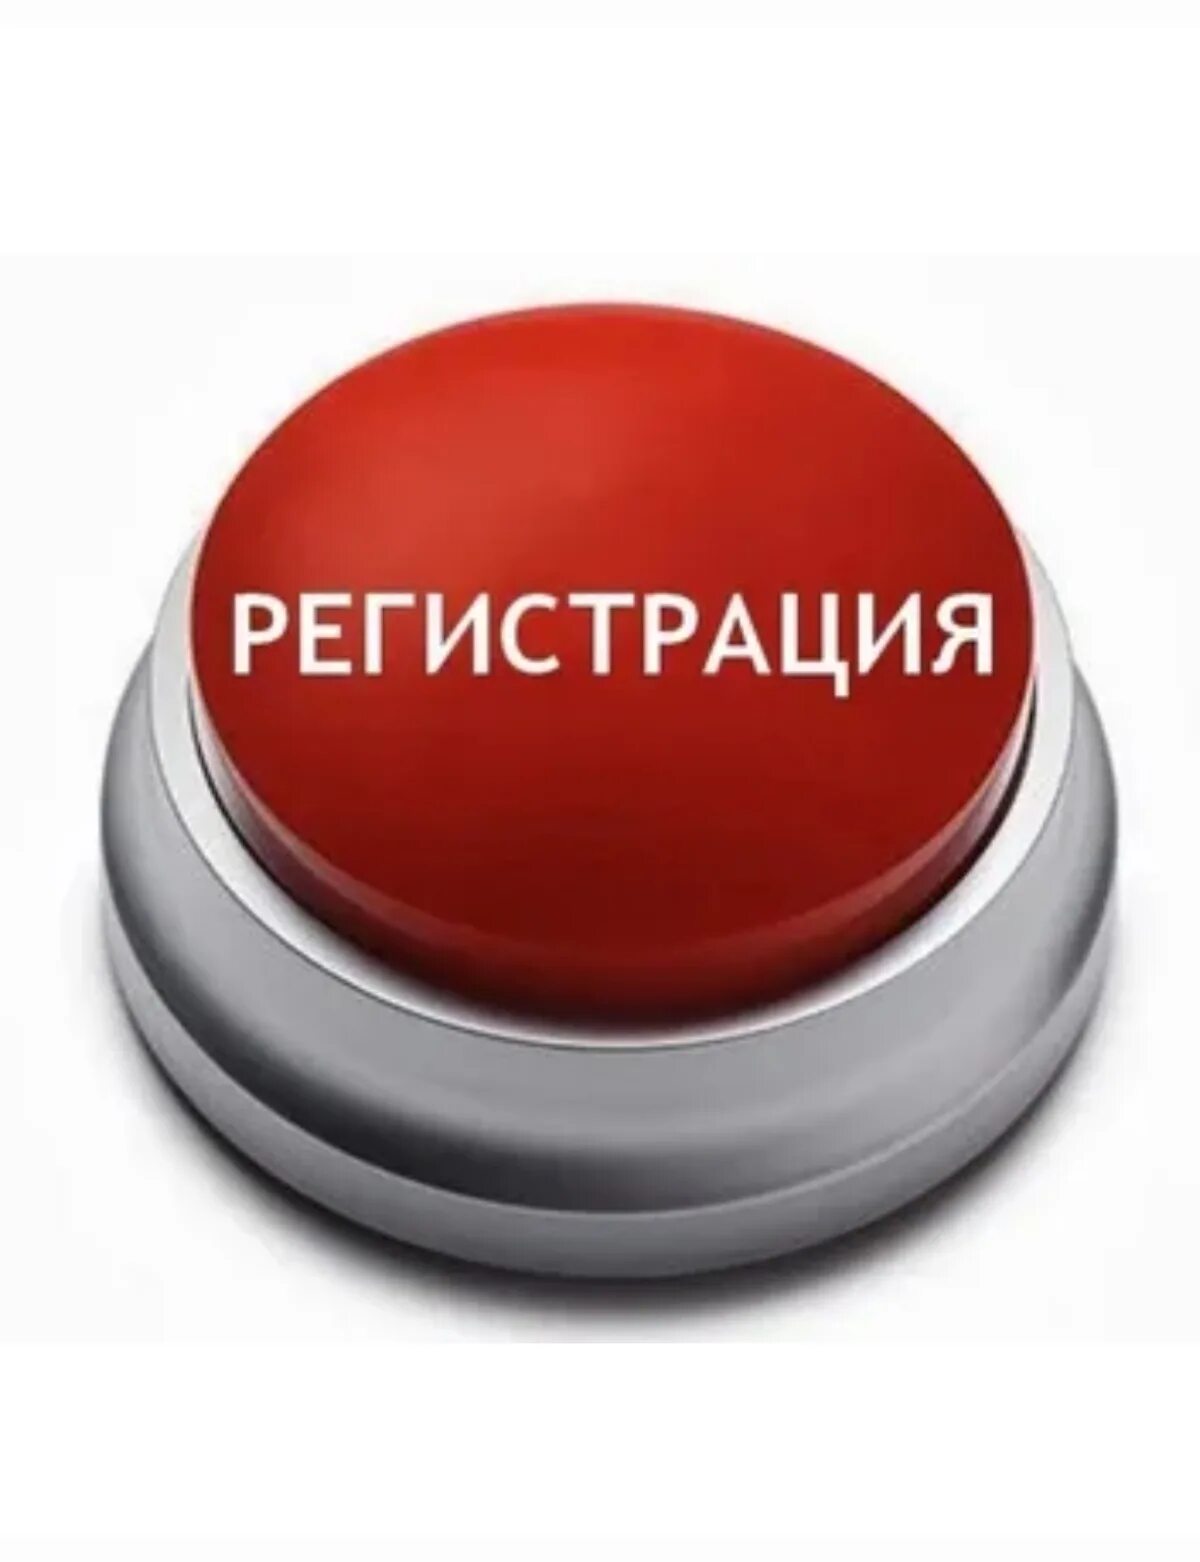 Кнопка. Красная кнопка. Картинка жми на кнопку. Красная кнопка конец.